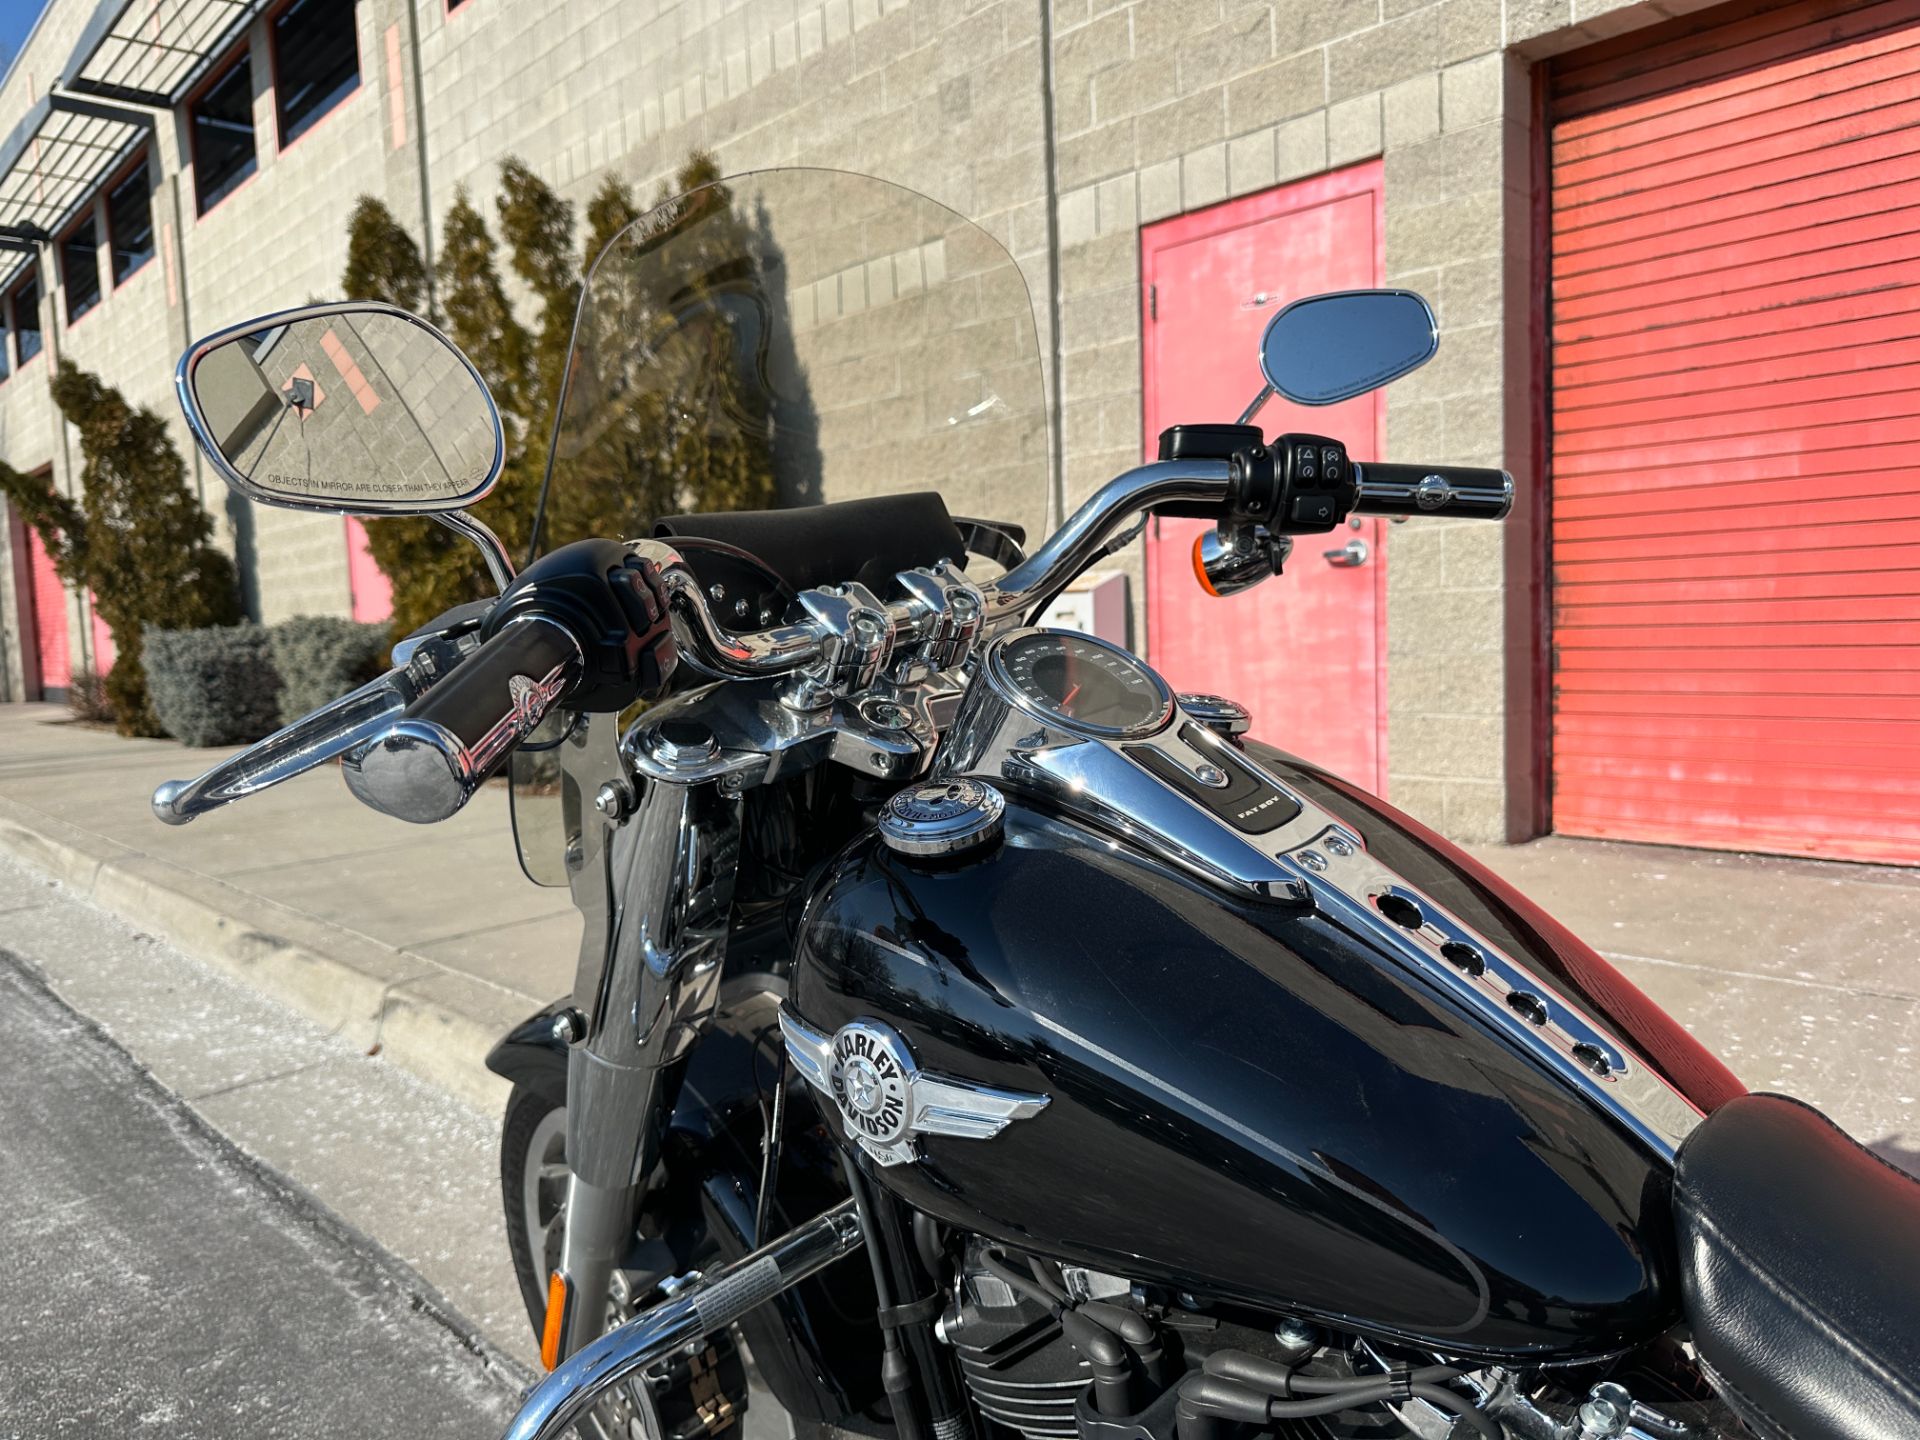 2021 Harley-Davidson Fat Boy® 114 in Sandy, Utah - Photo 11